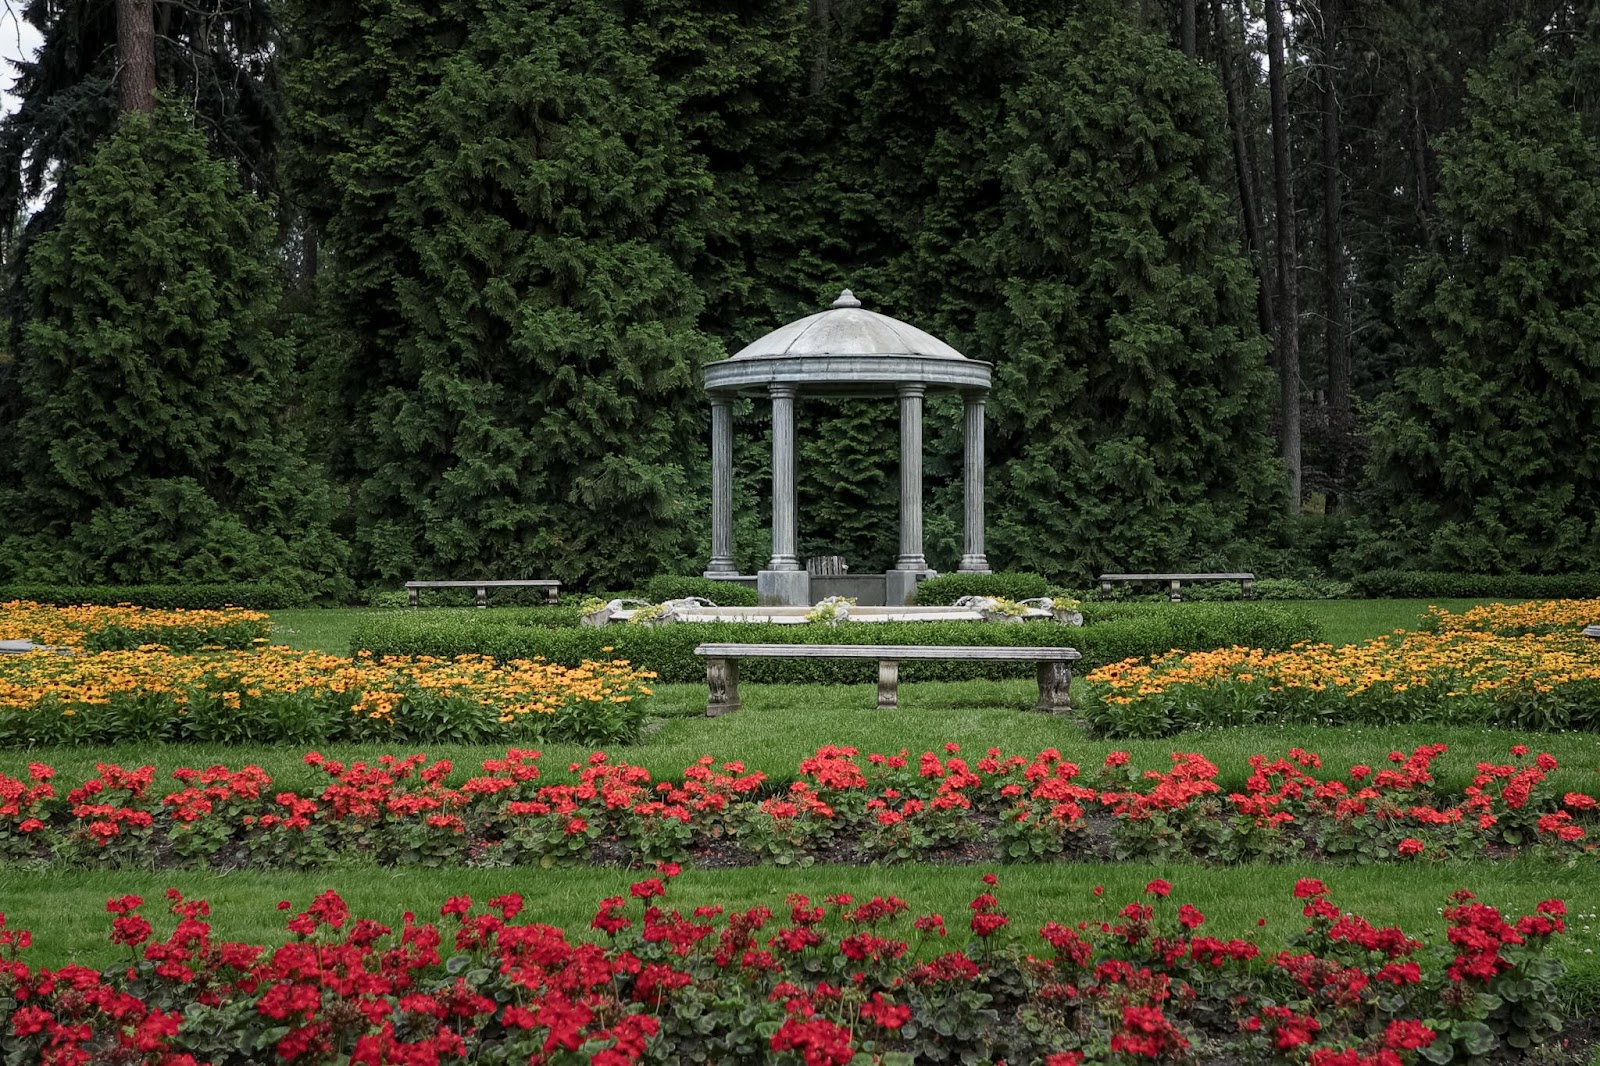 The Duncan Garden Gazebo in Manito Park best place for family photoshoot in spokane